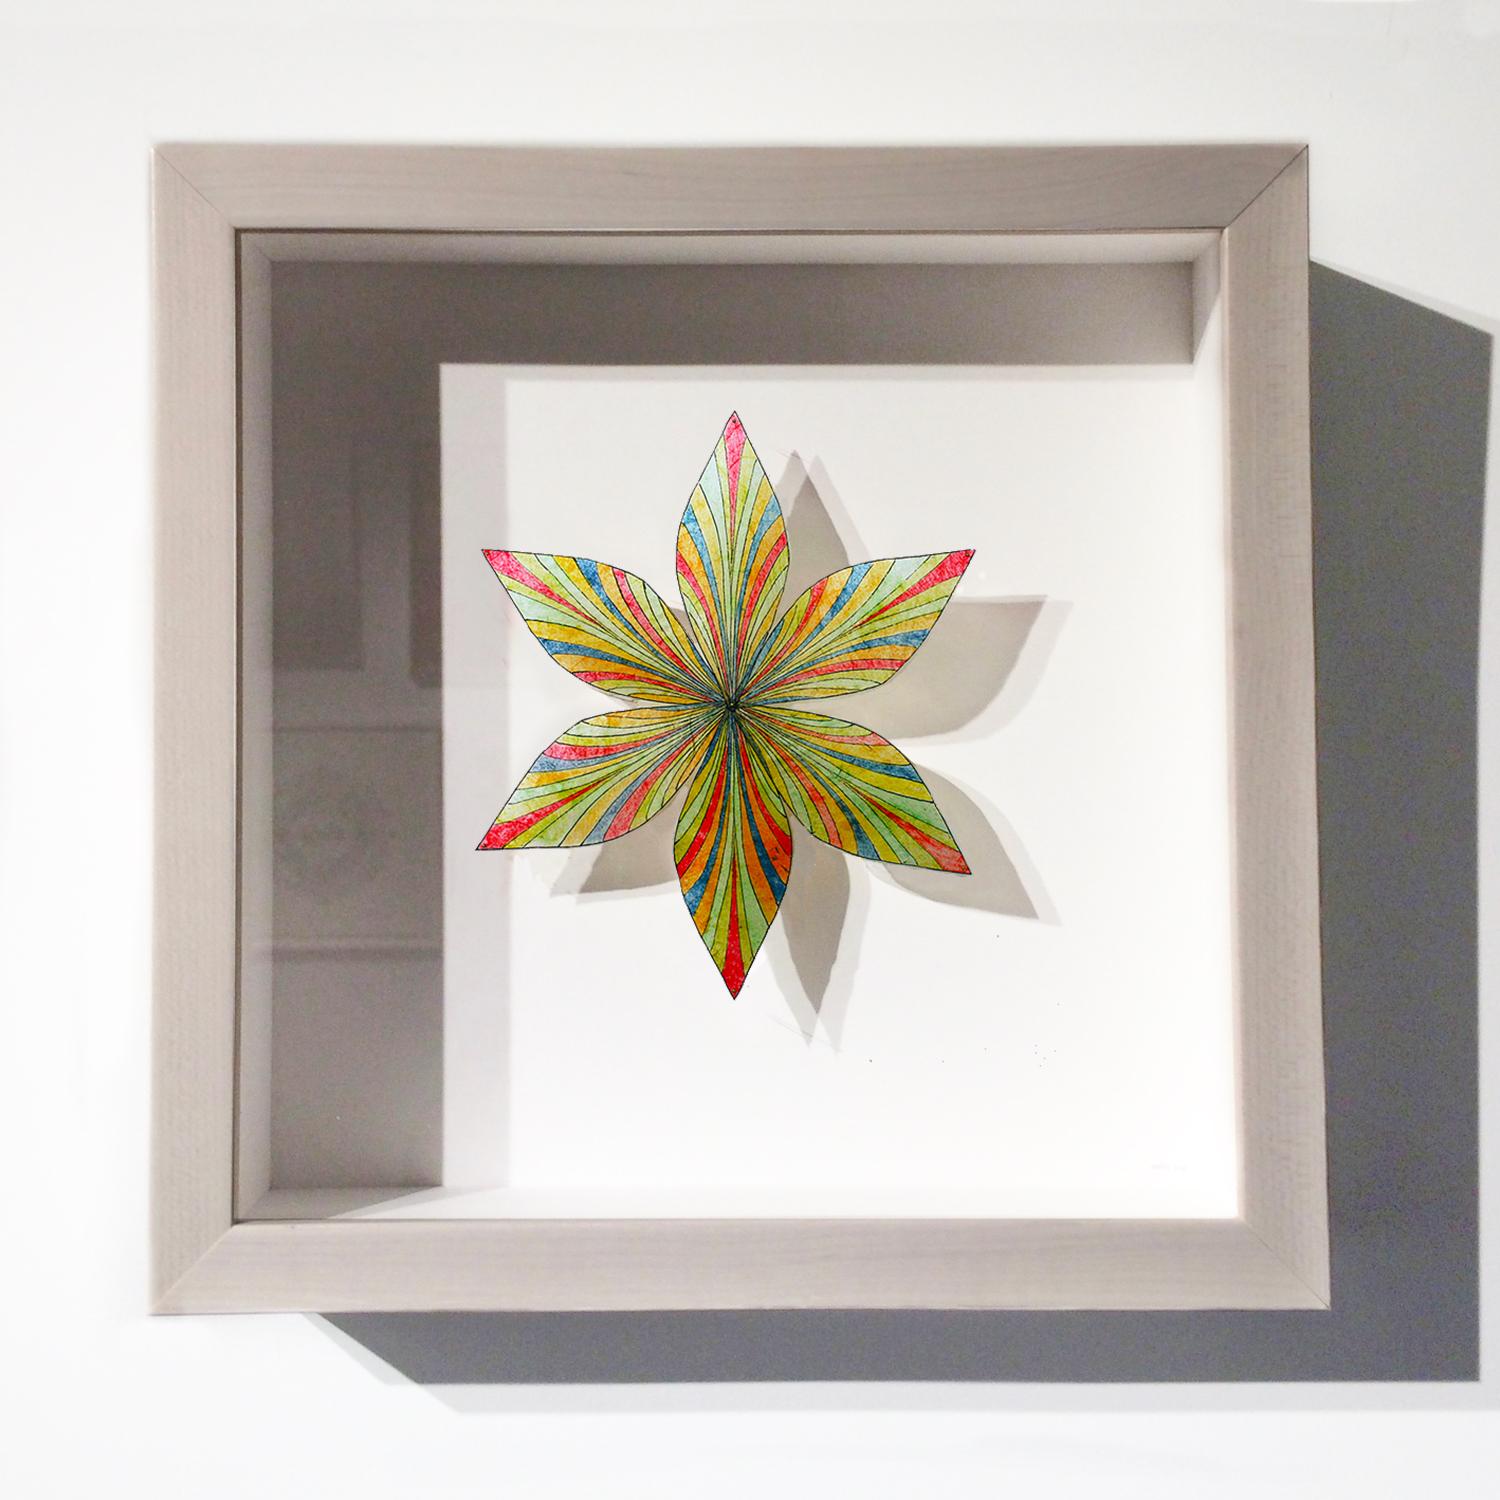 Shooting Star, Pinned Paper Flower in Light Green, Blue-Grey, Light Orange, Red - Sculpture by Jill Parisi